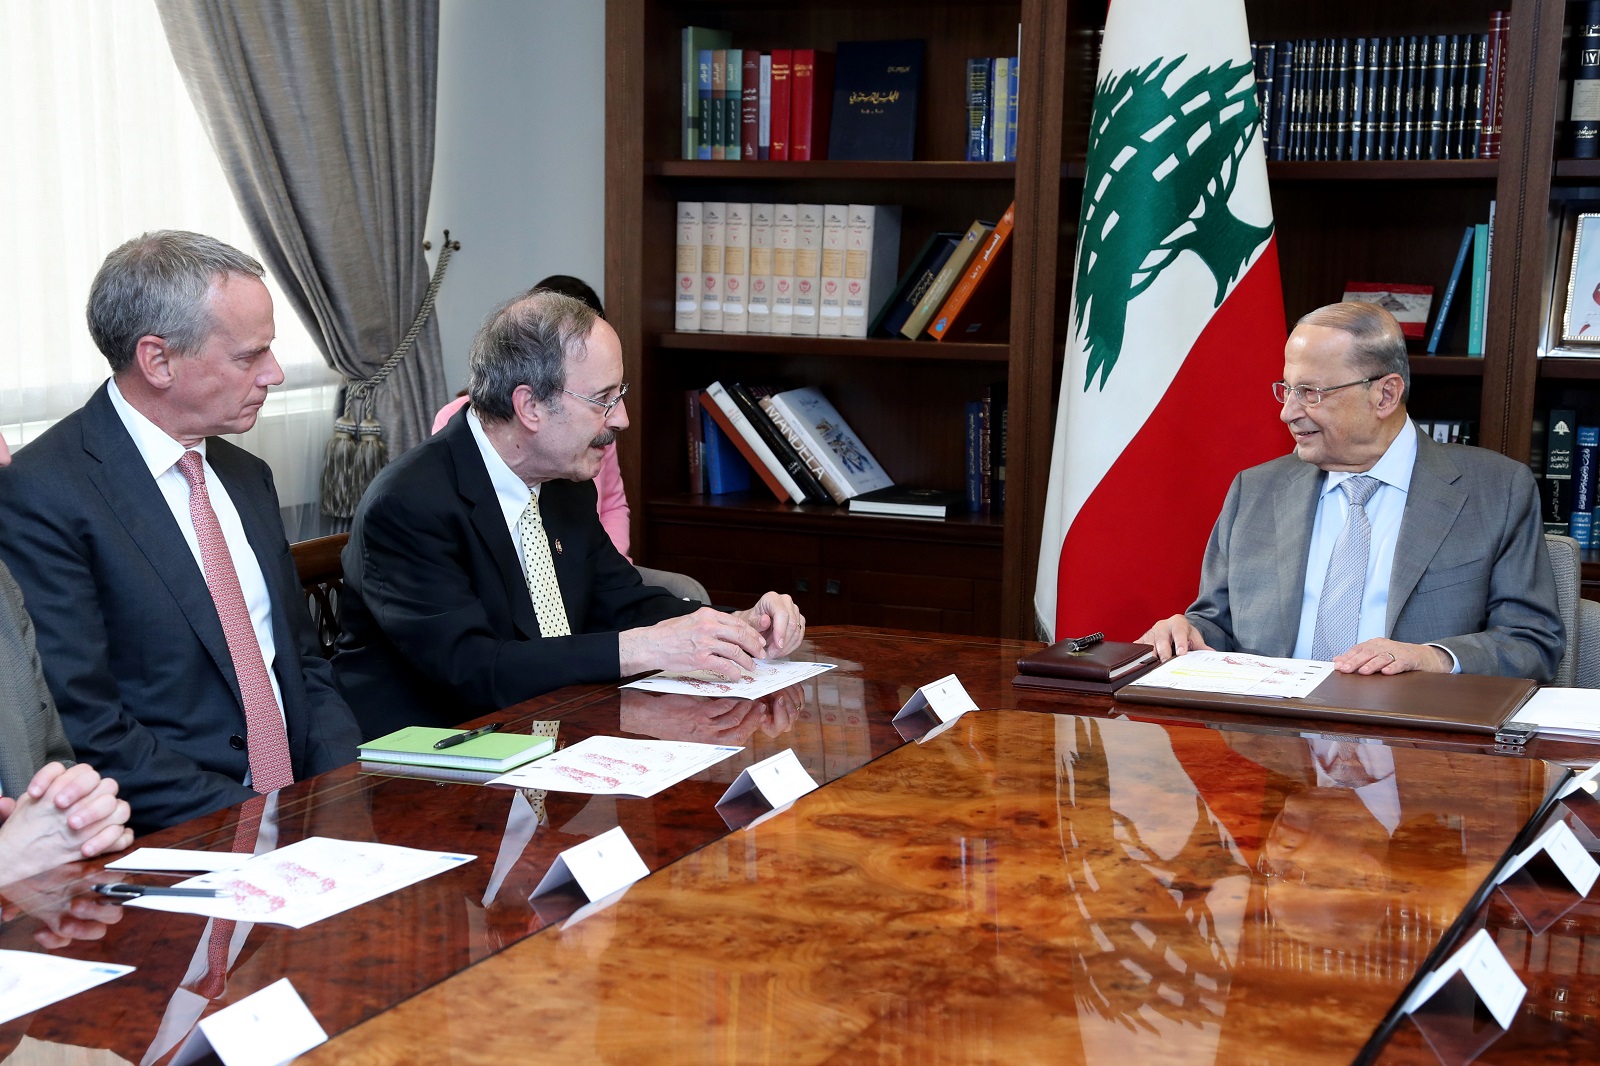 Lebanese President meets Mp Eliot Engel